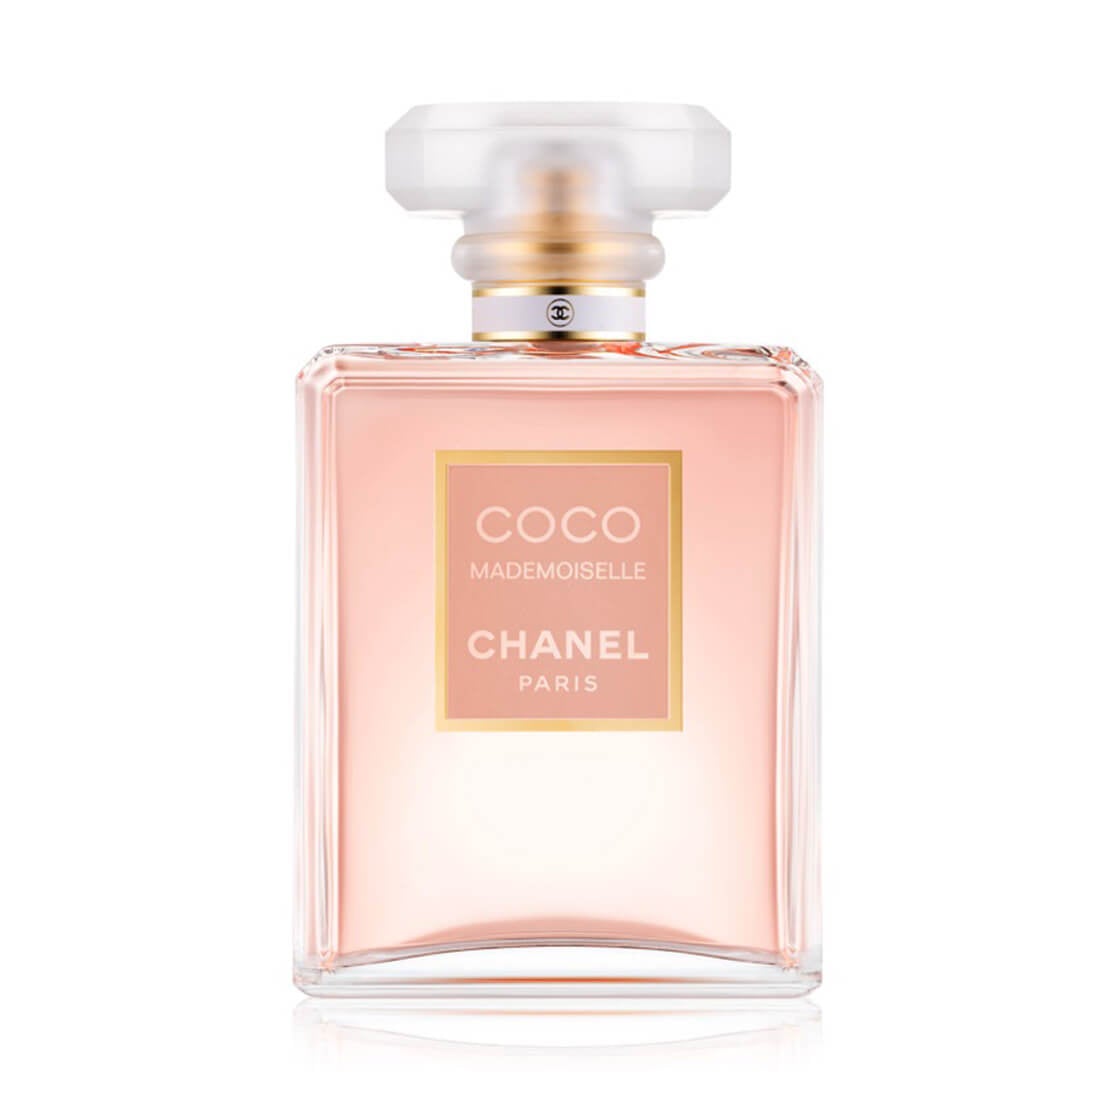 Chanel Coco Mademoiselle Eau De Parfum Sample Perfume Vial